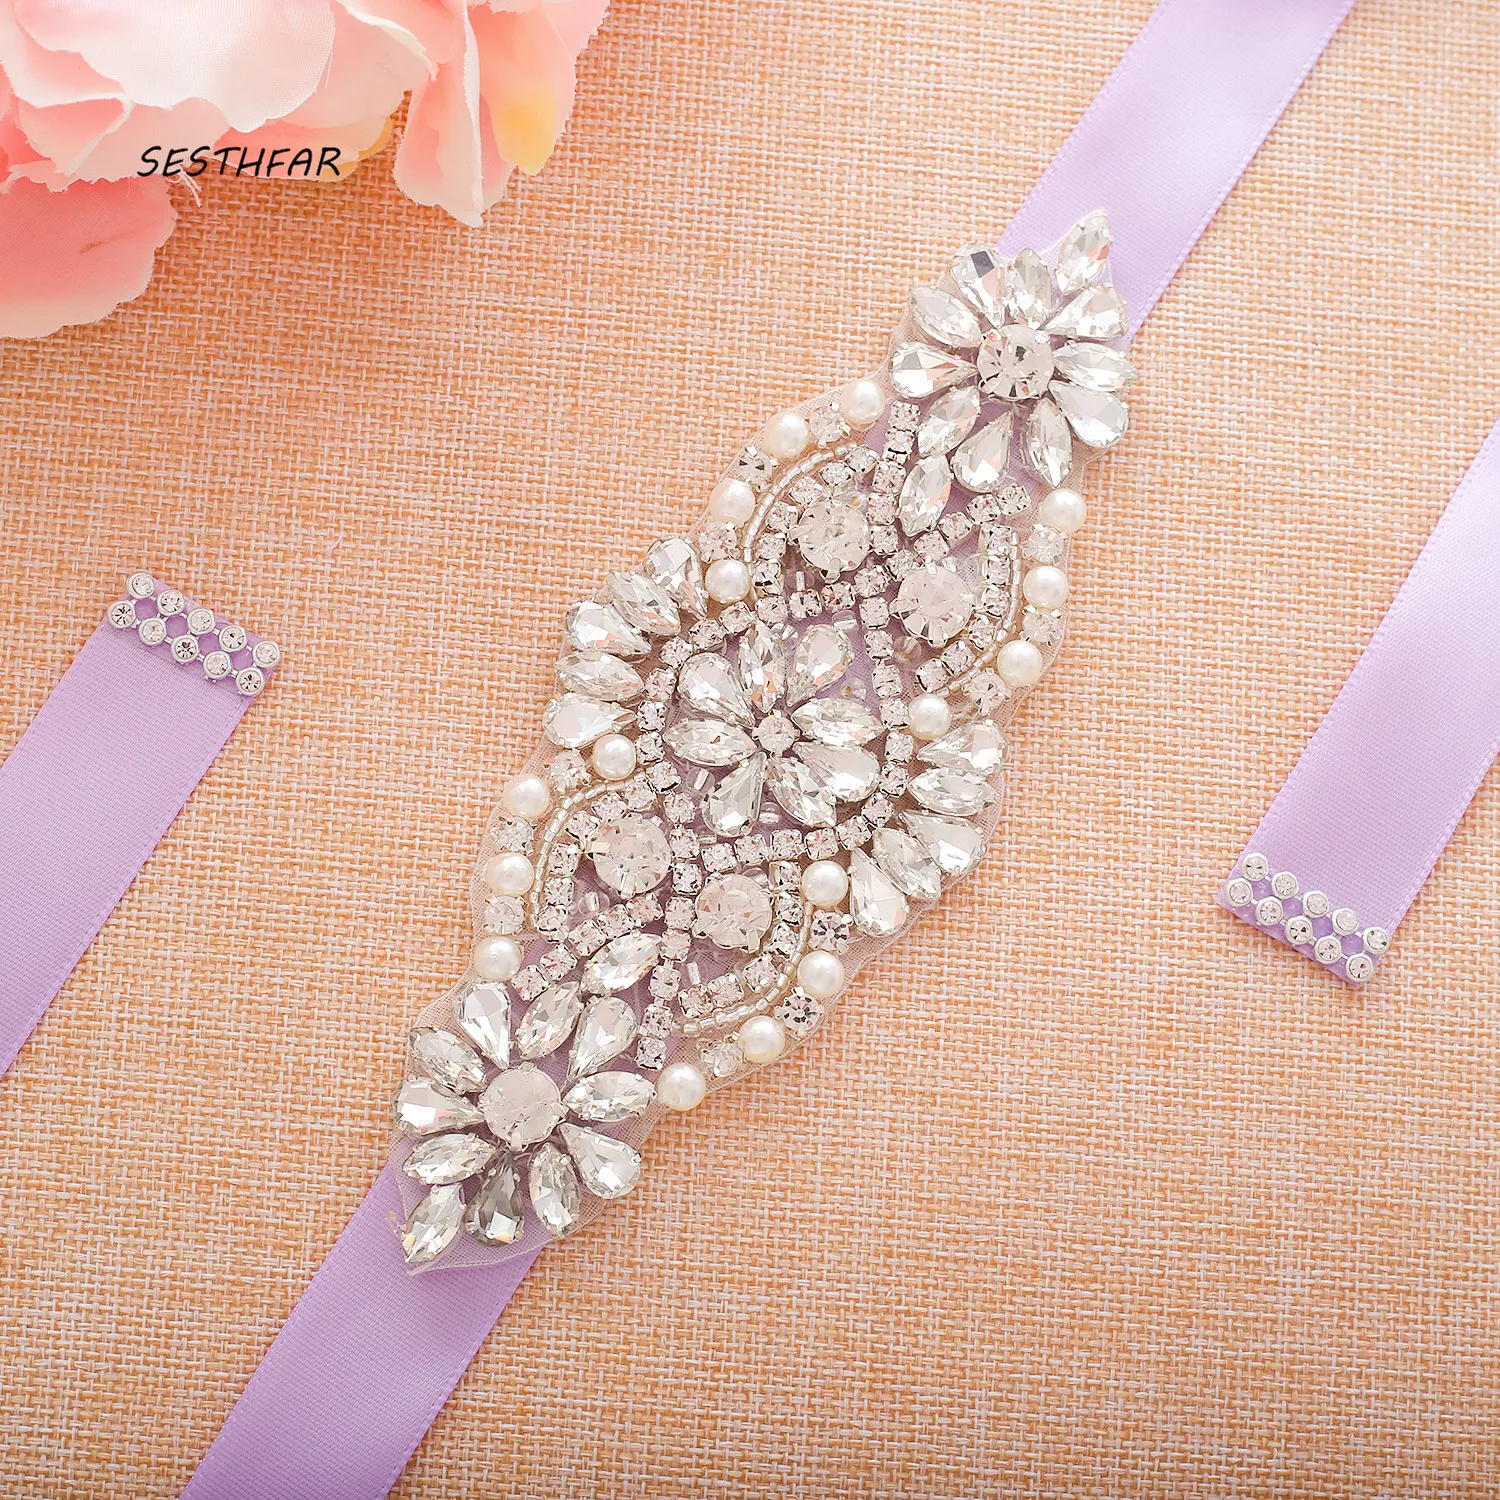 SESTHFAR Silver Wedding Belt With Pearls Luxurious Rhinestones Ribbons Bridal Sash Crystal Wedding Belt For Wedding Party Gown